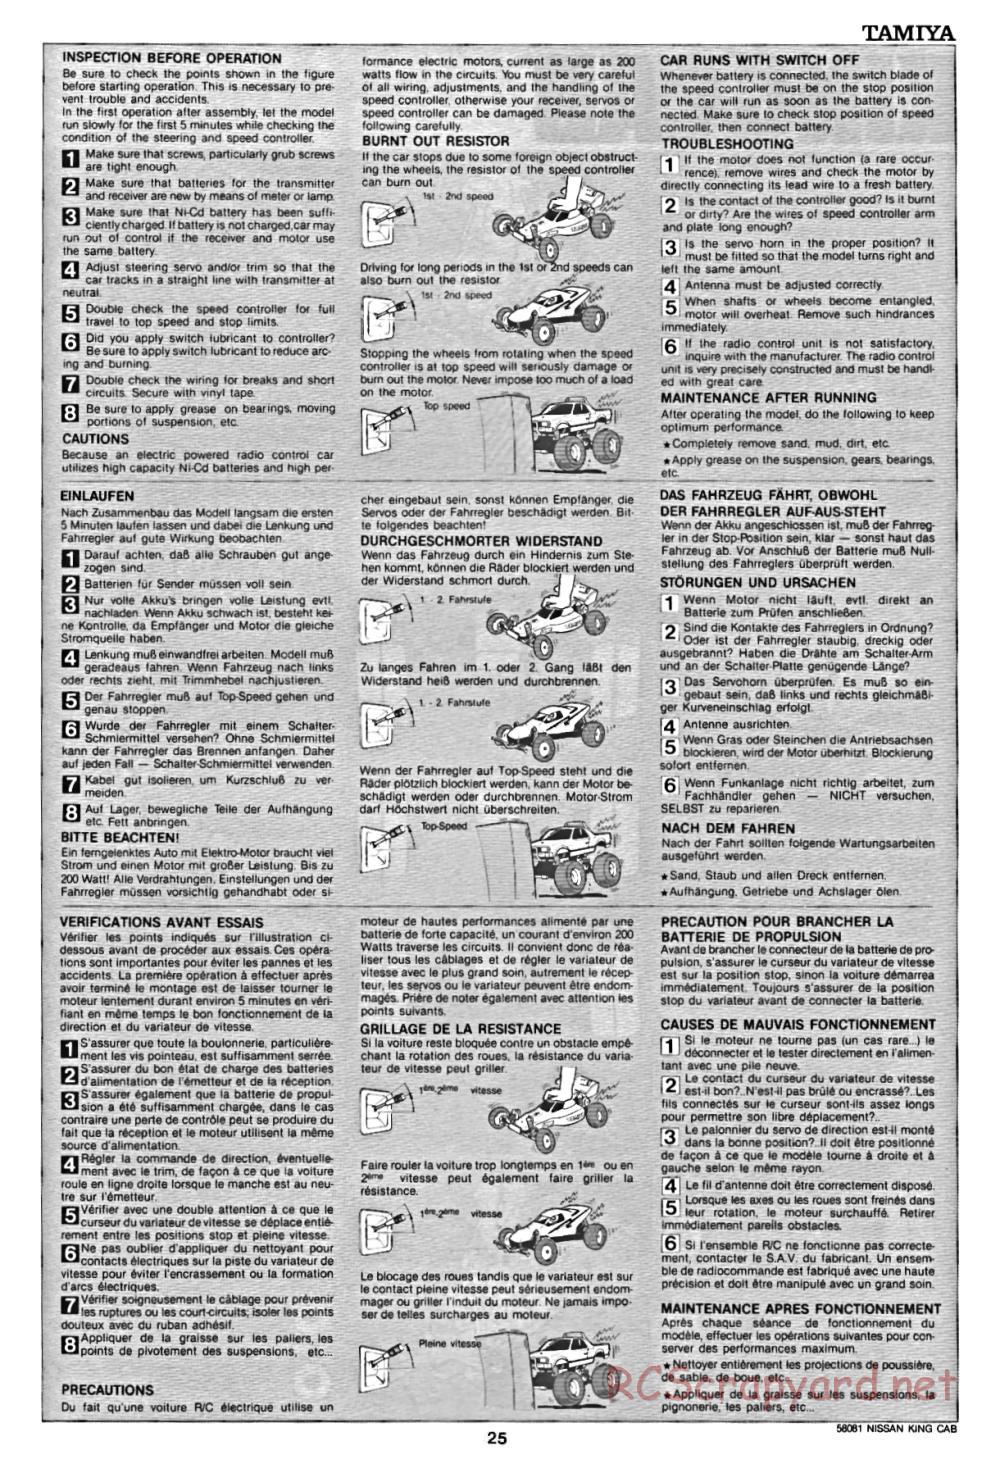 Tamiya - Nissan King Cab - 58081 - Manual - Page 25